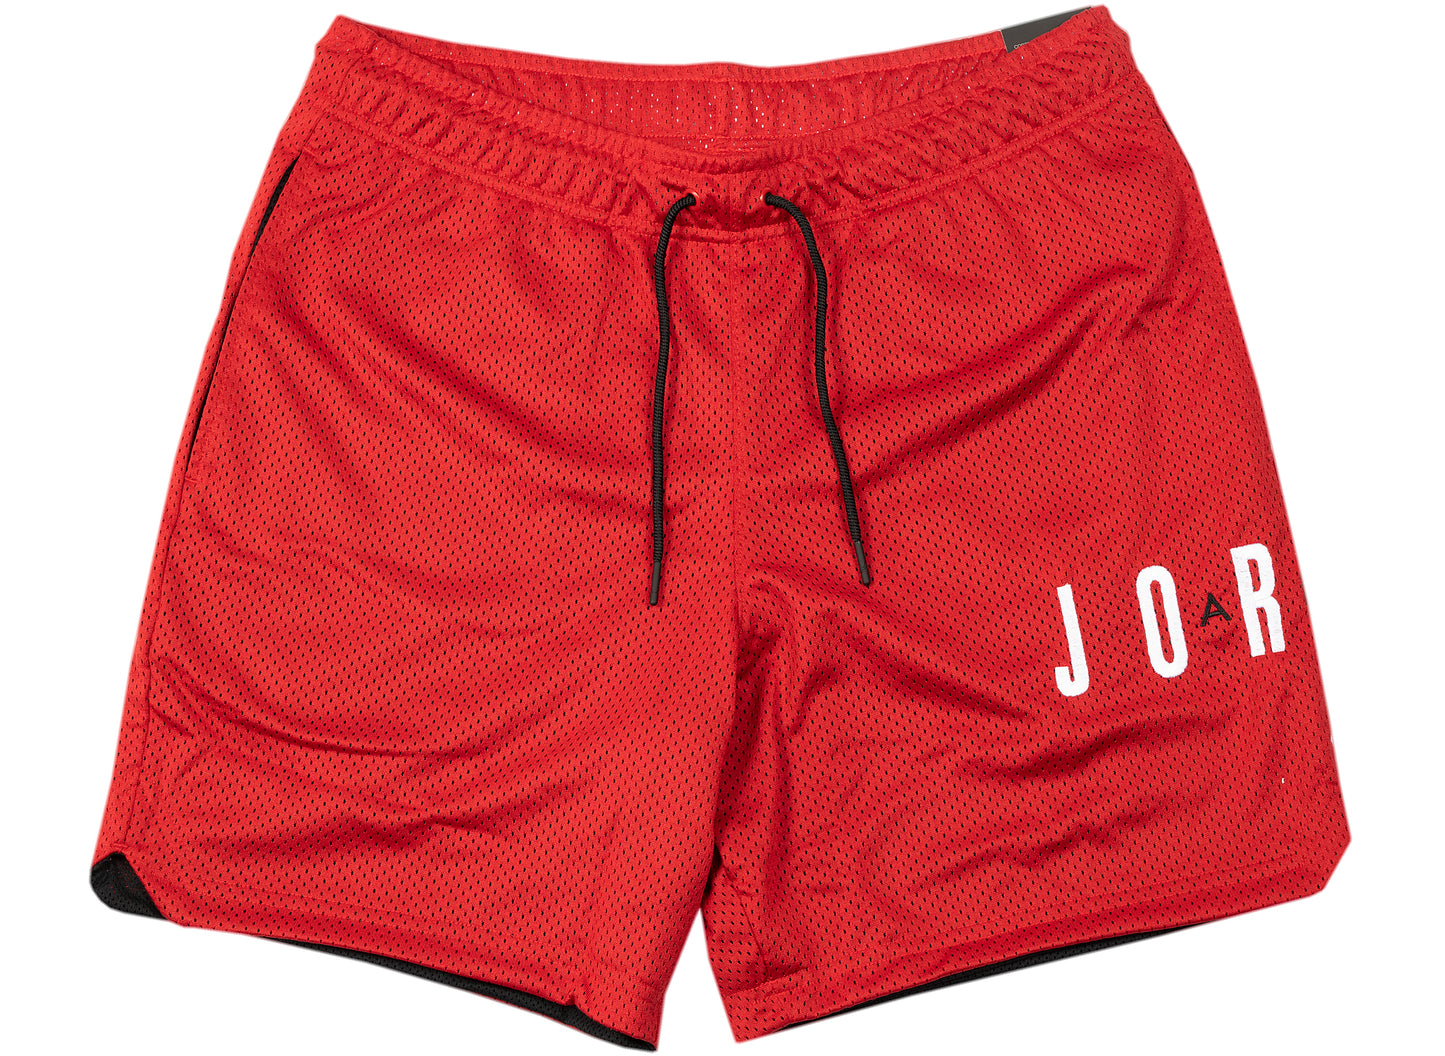 Jordan Jumpman Air Shorts in Red